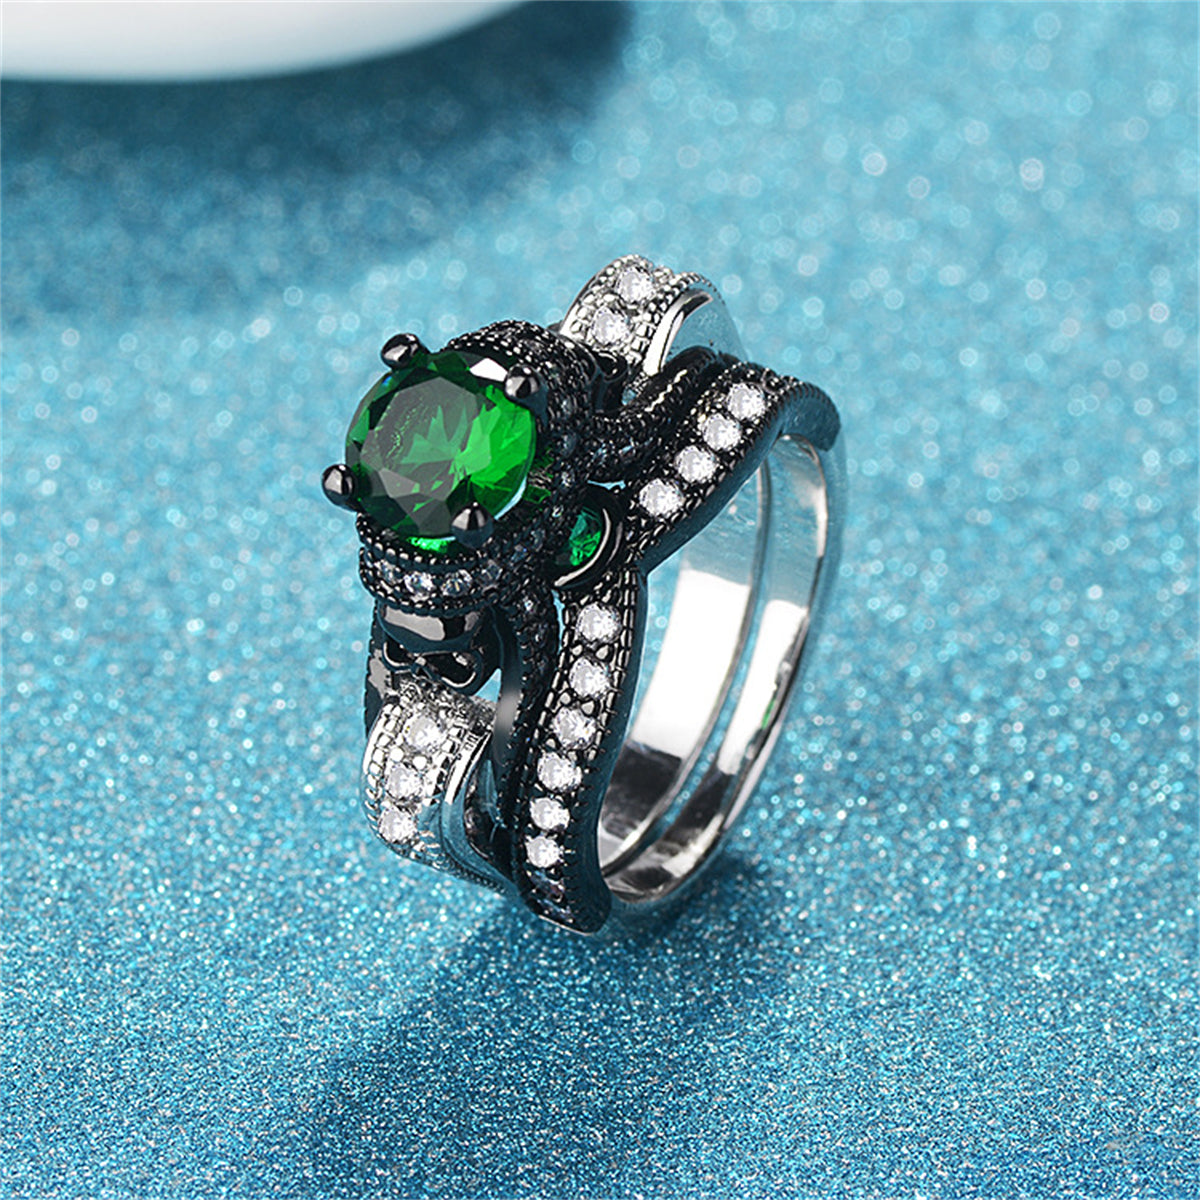 Green Crystal & Cubic Zirconia Two-Tone Skull Ring Set